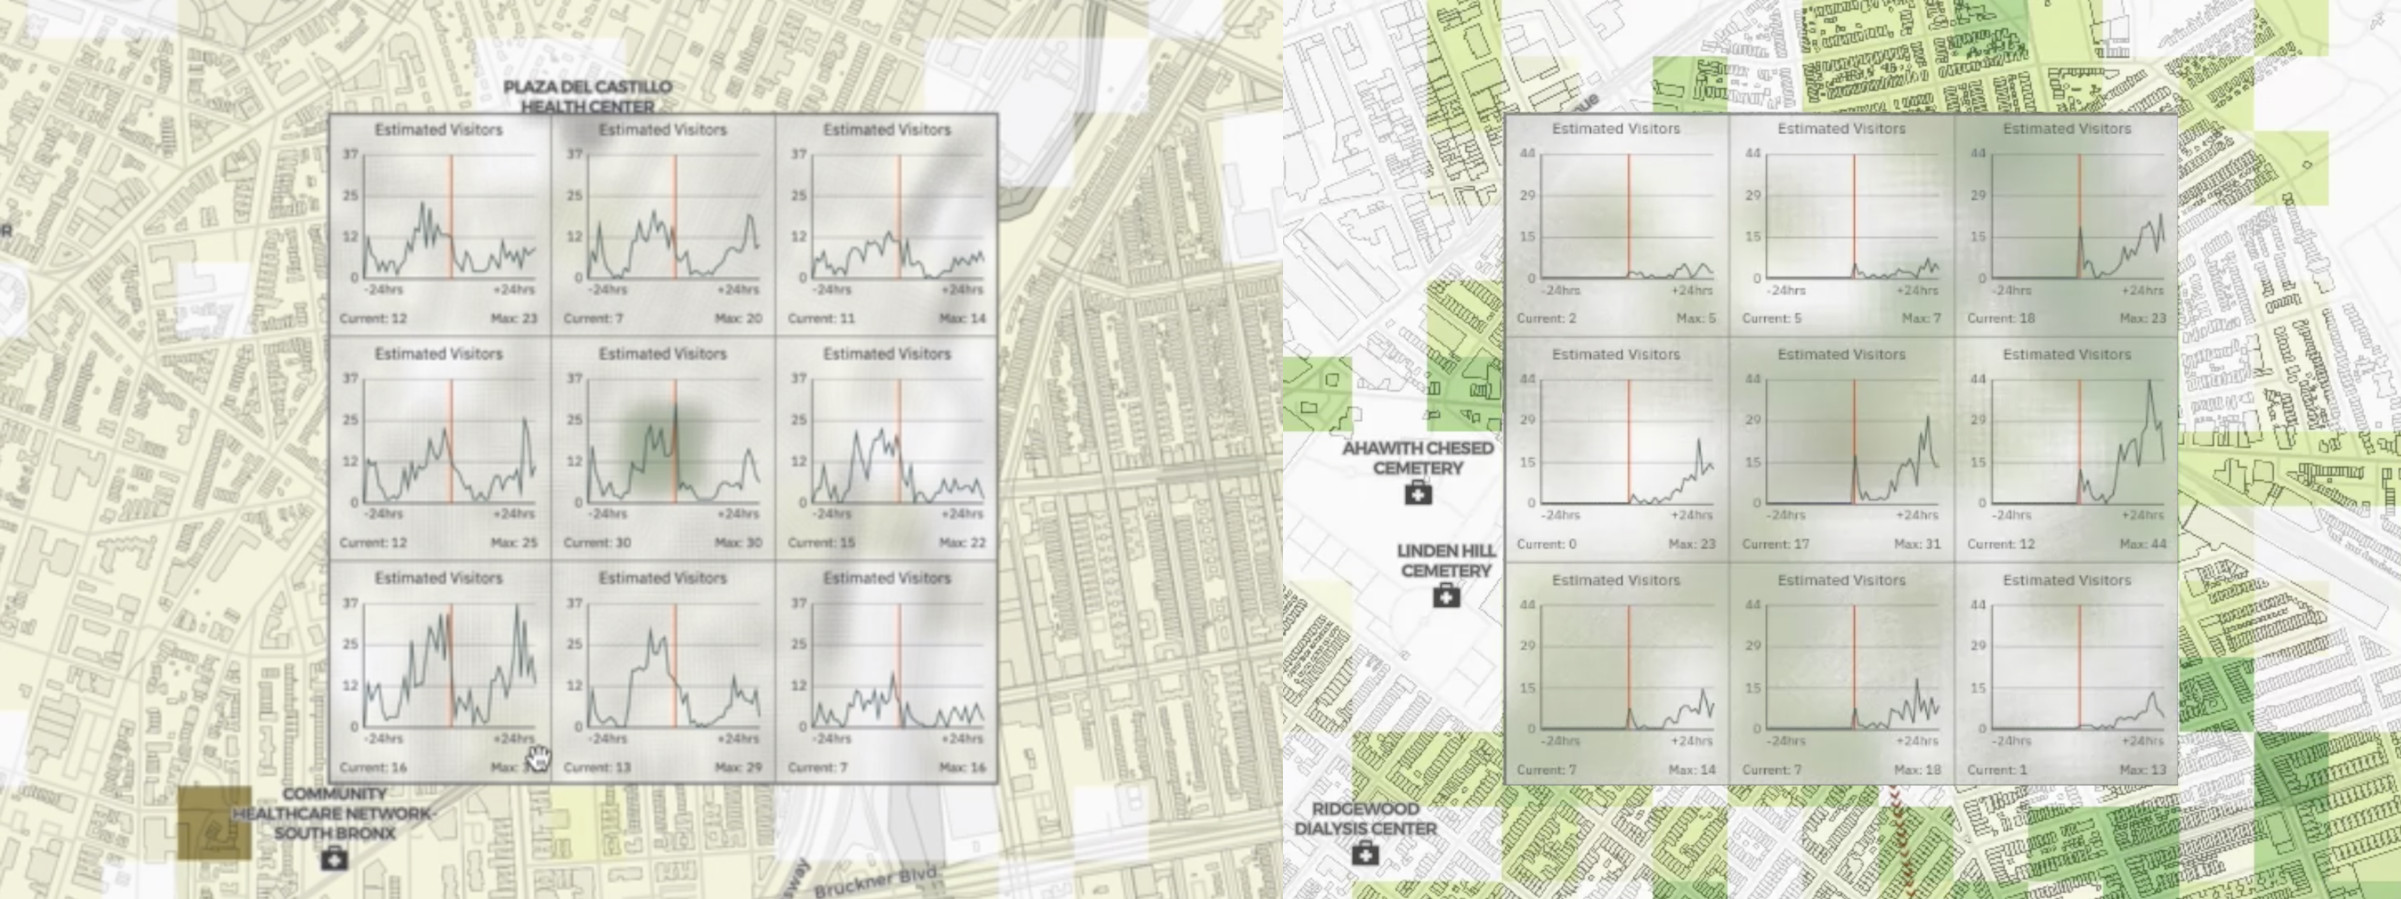 Time-series matrix of estimated visitor trends for adjacent neighbourhoods